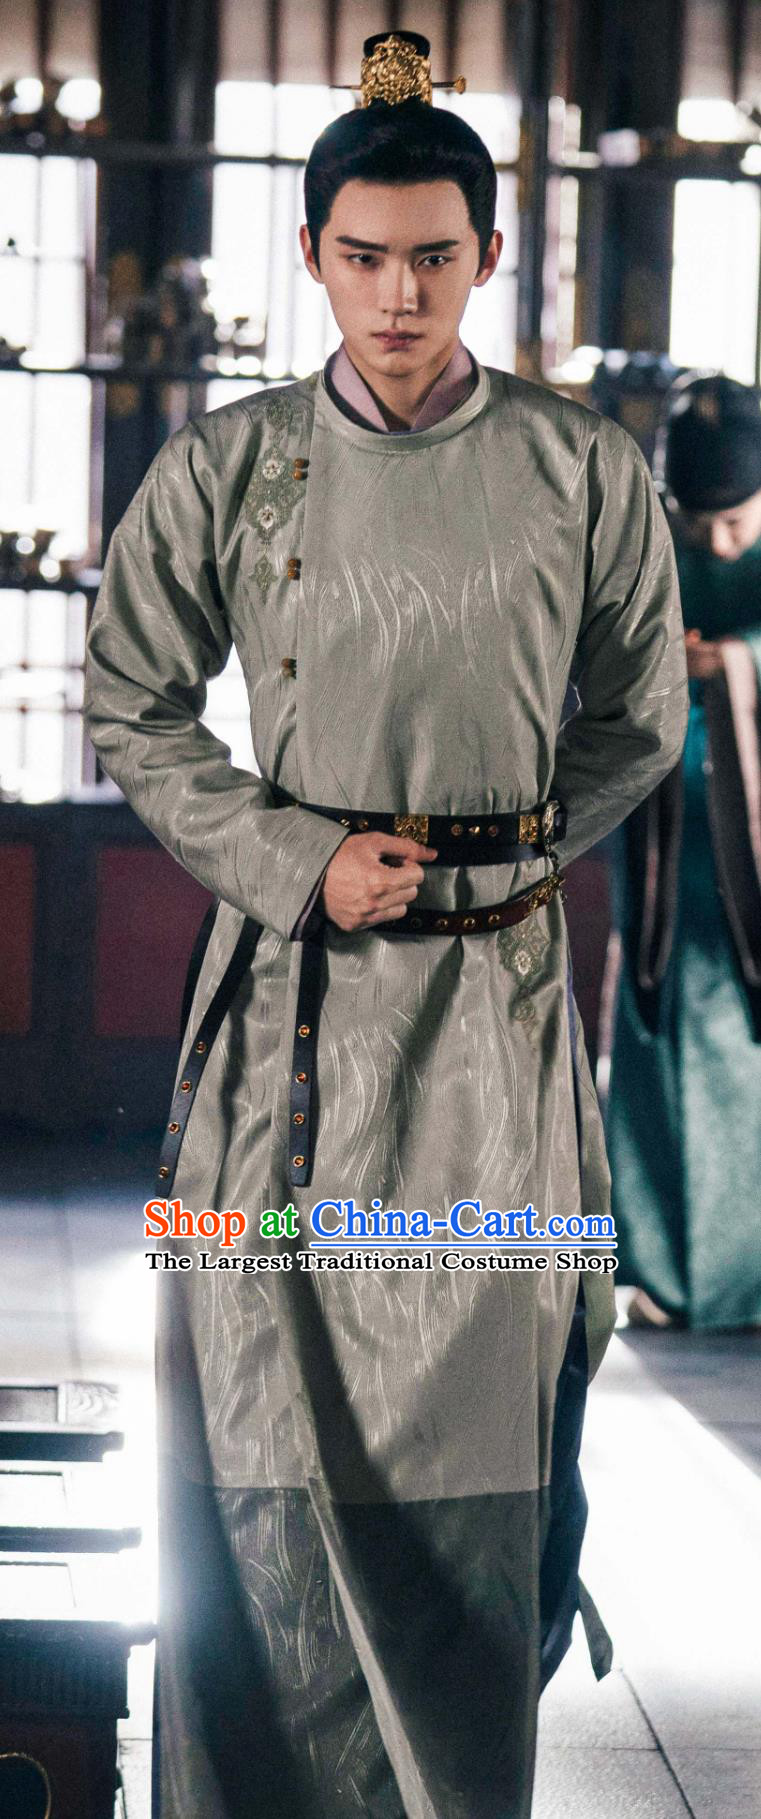 China Ancient Noble Childe Costumes TV Drama The Legend of Zhuohua Crown Prince Liu Chen Garments